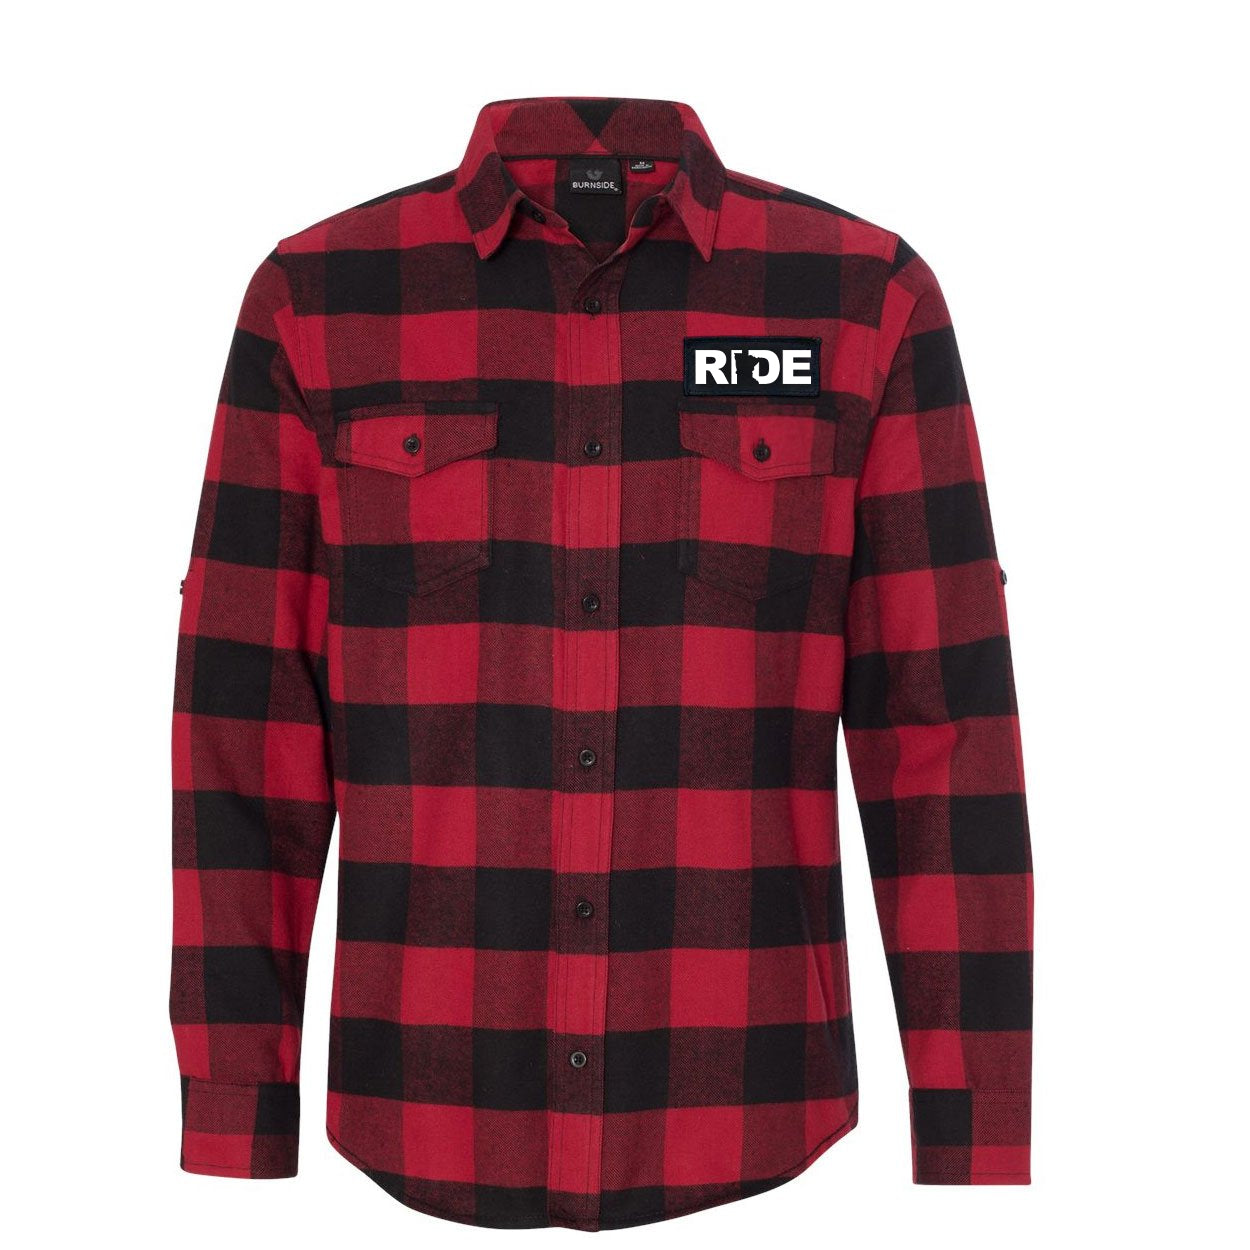 Ride MN Classic Flannel in Red/Black Buffalo